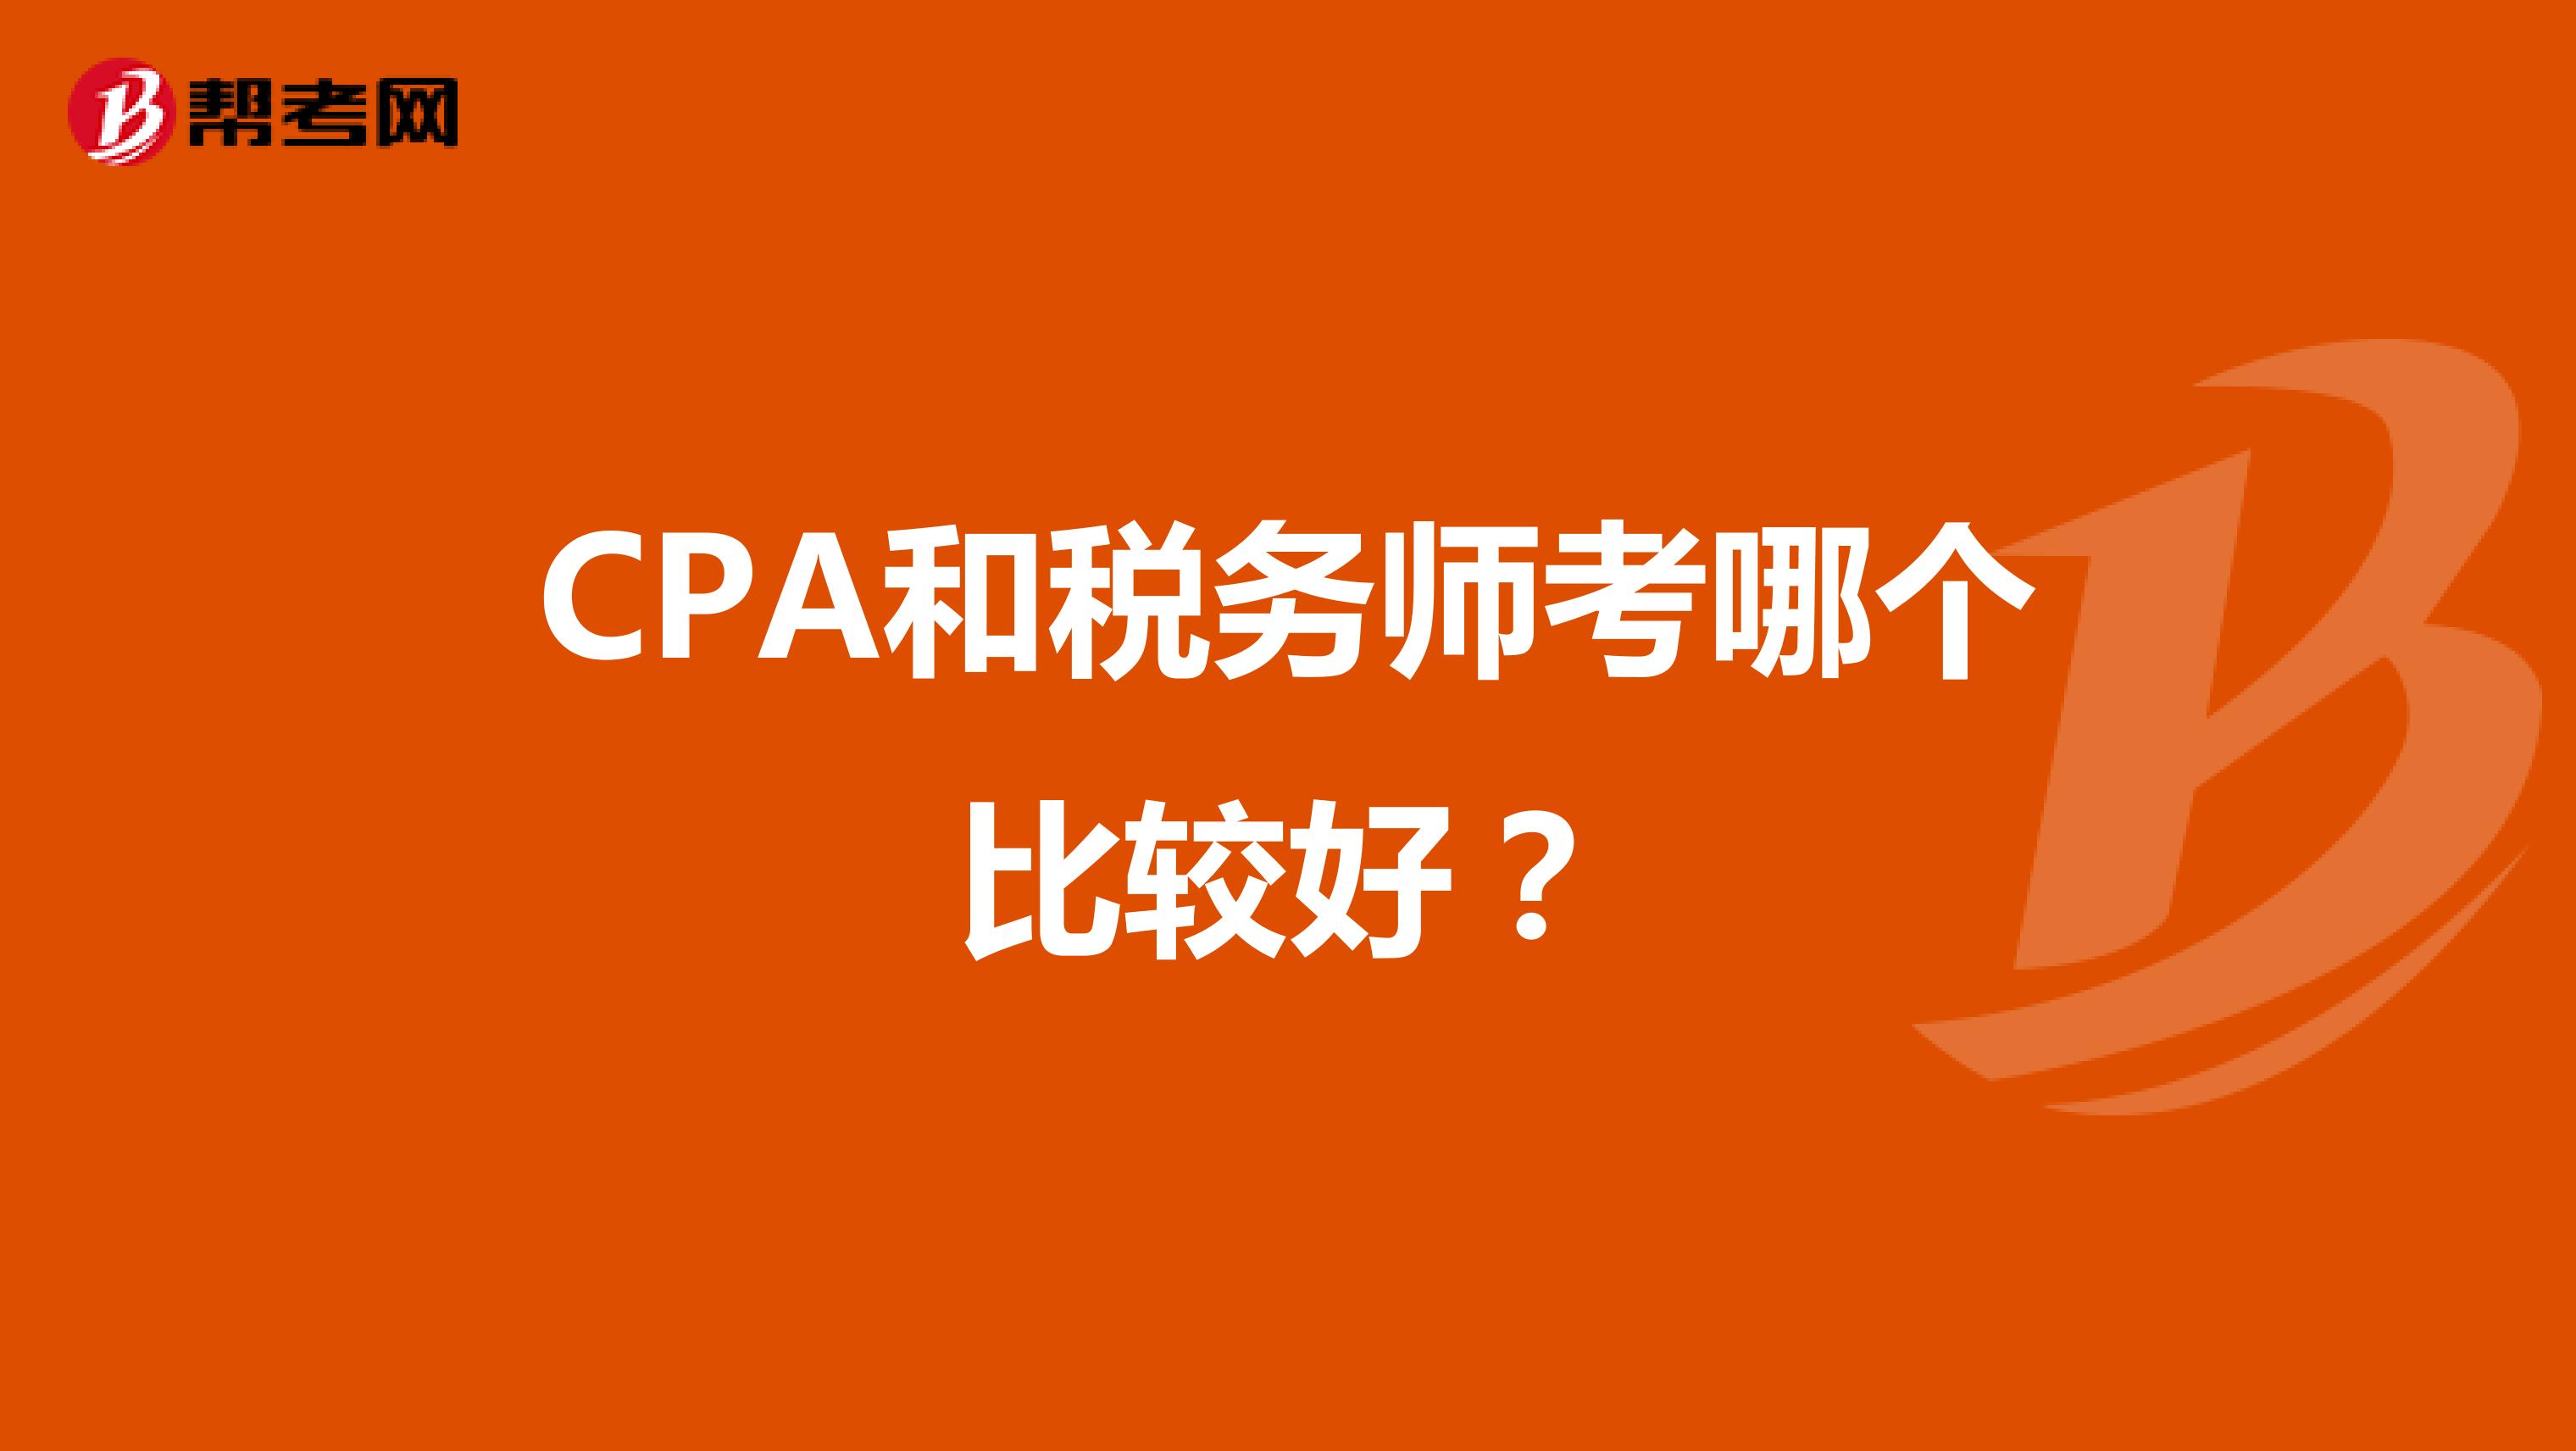 CPA和税务师考哪个比较好？